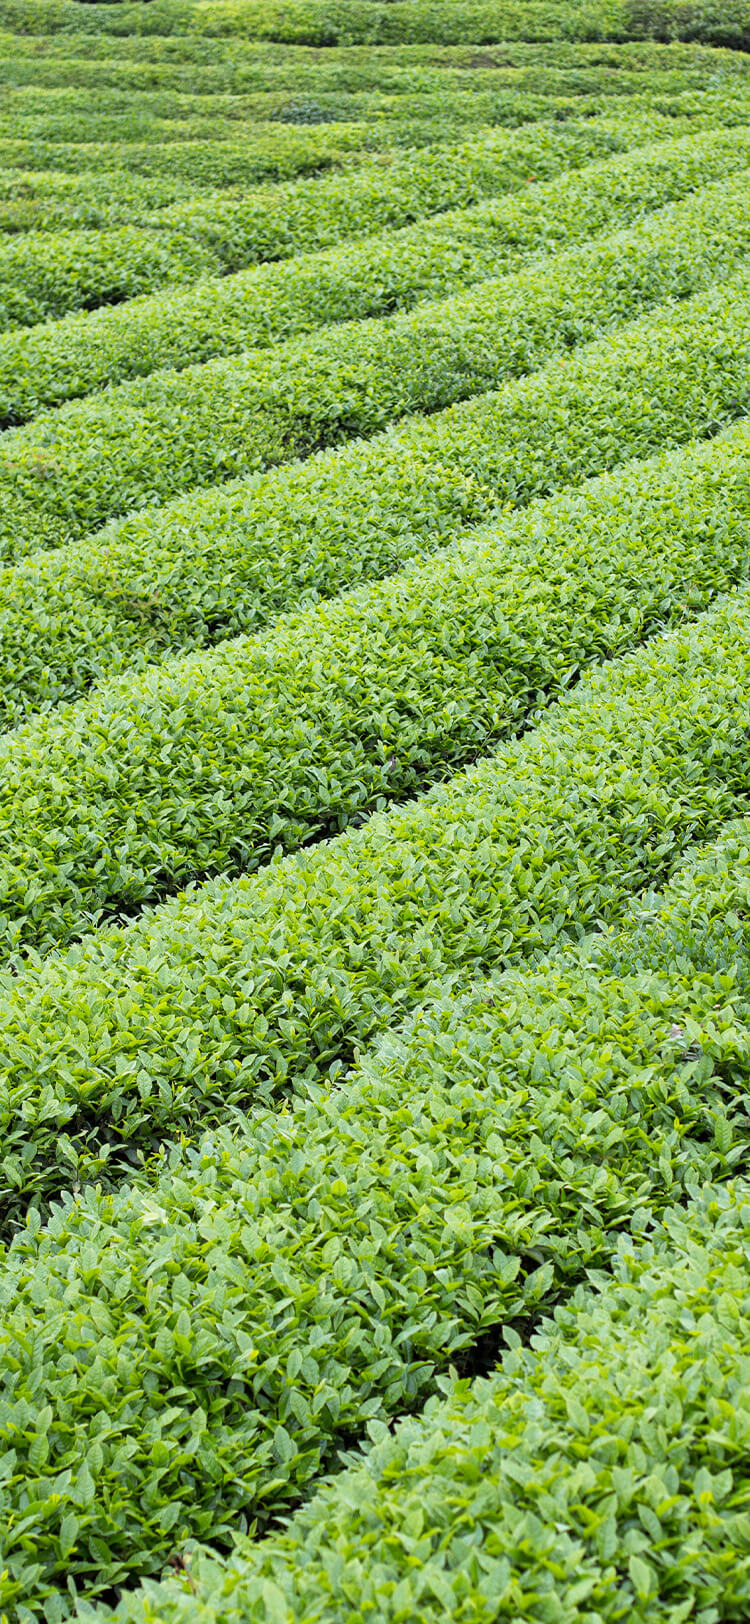 Tea fields in China